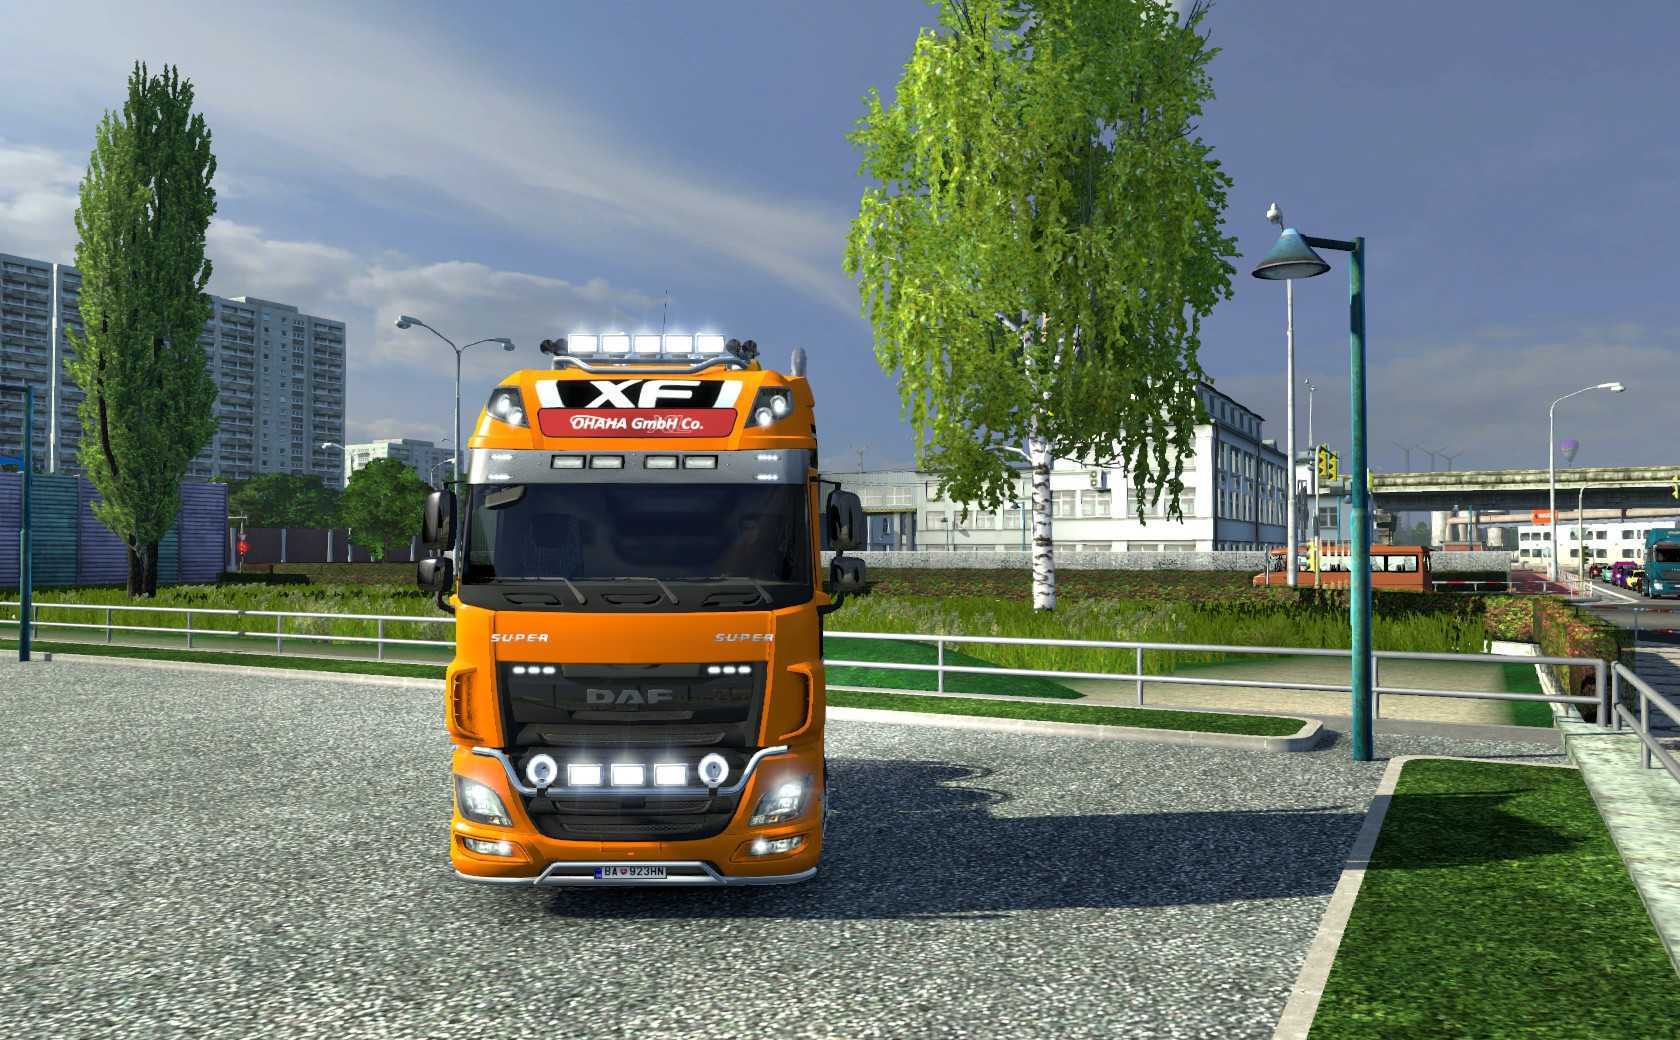 American truck simulator free download (v1.48.5.18s + all dlc’s)